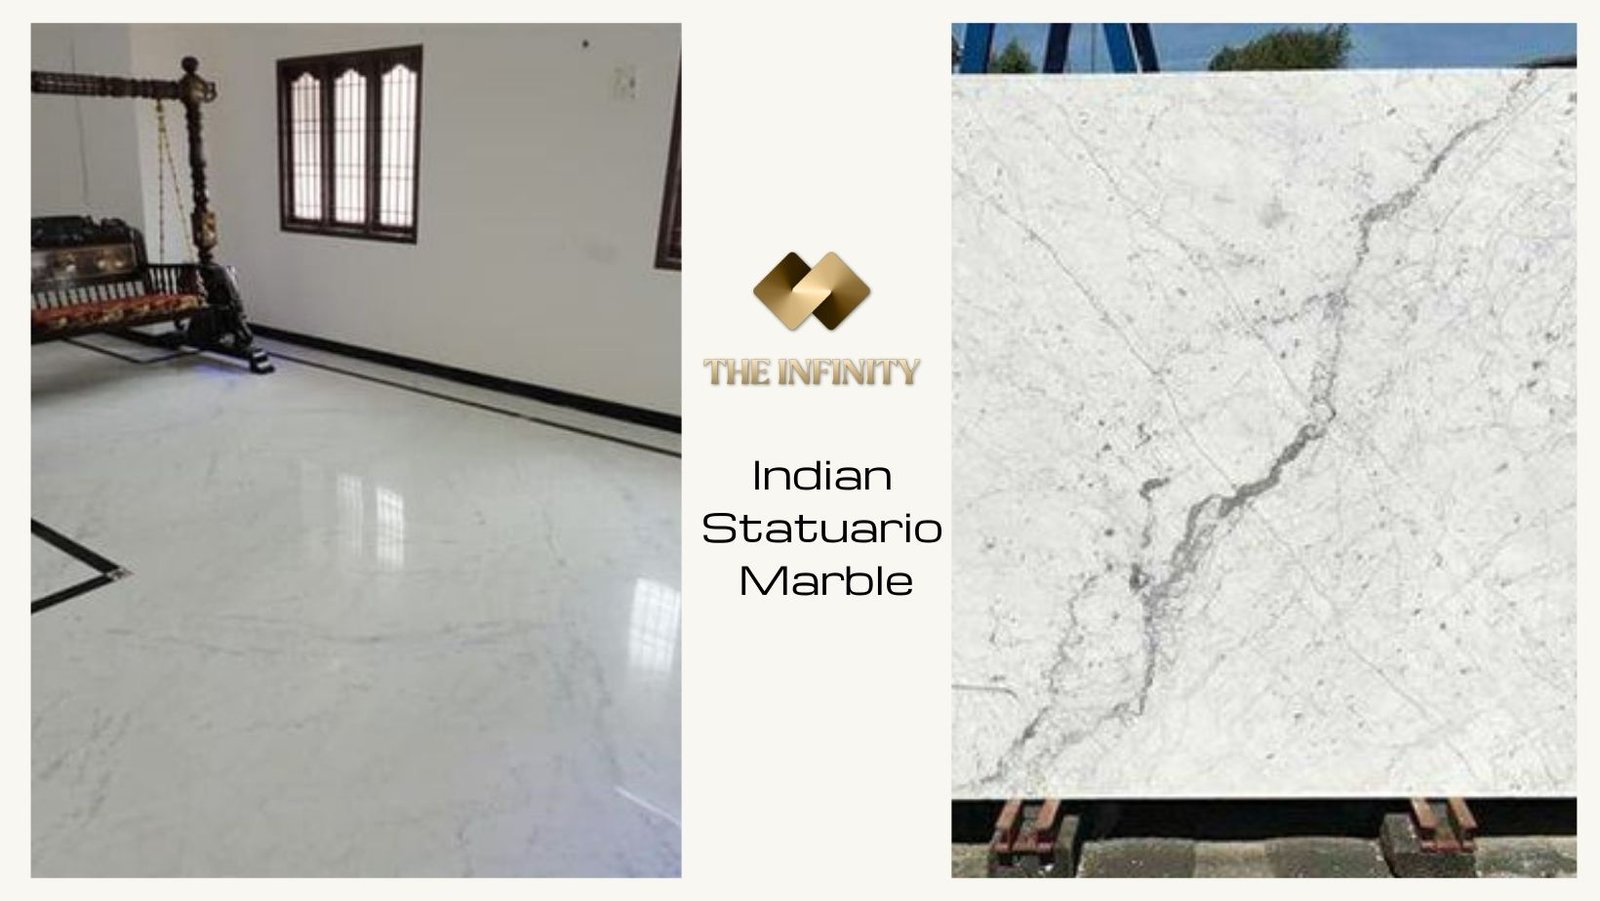 Difference Between Indian vs Italian Statuario Marble